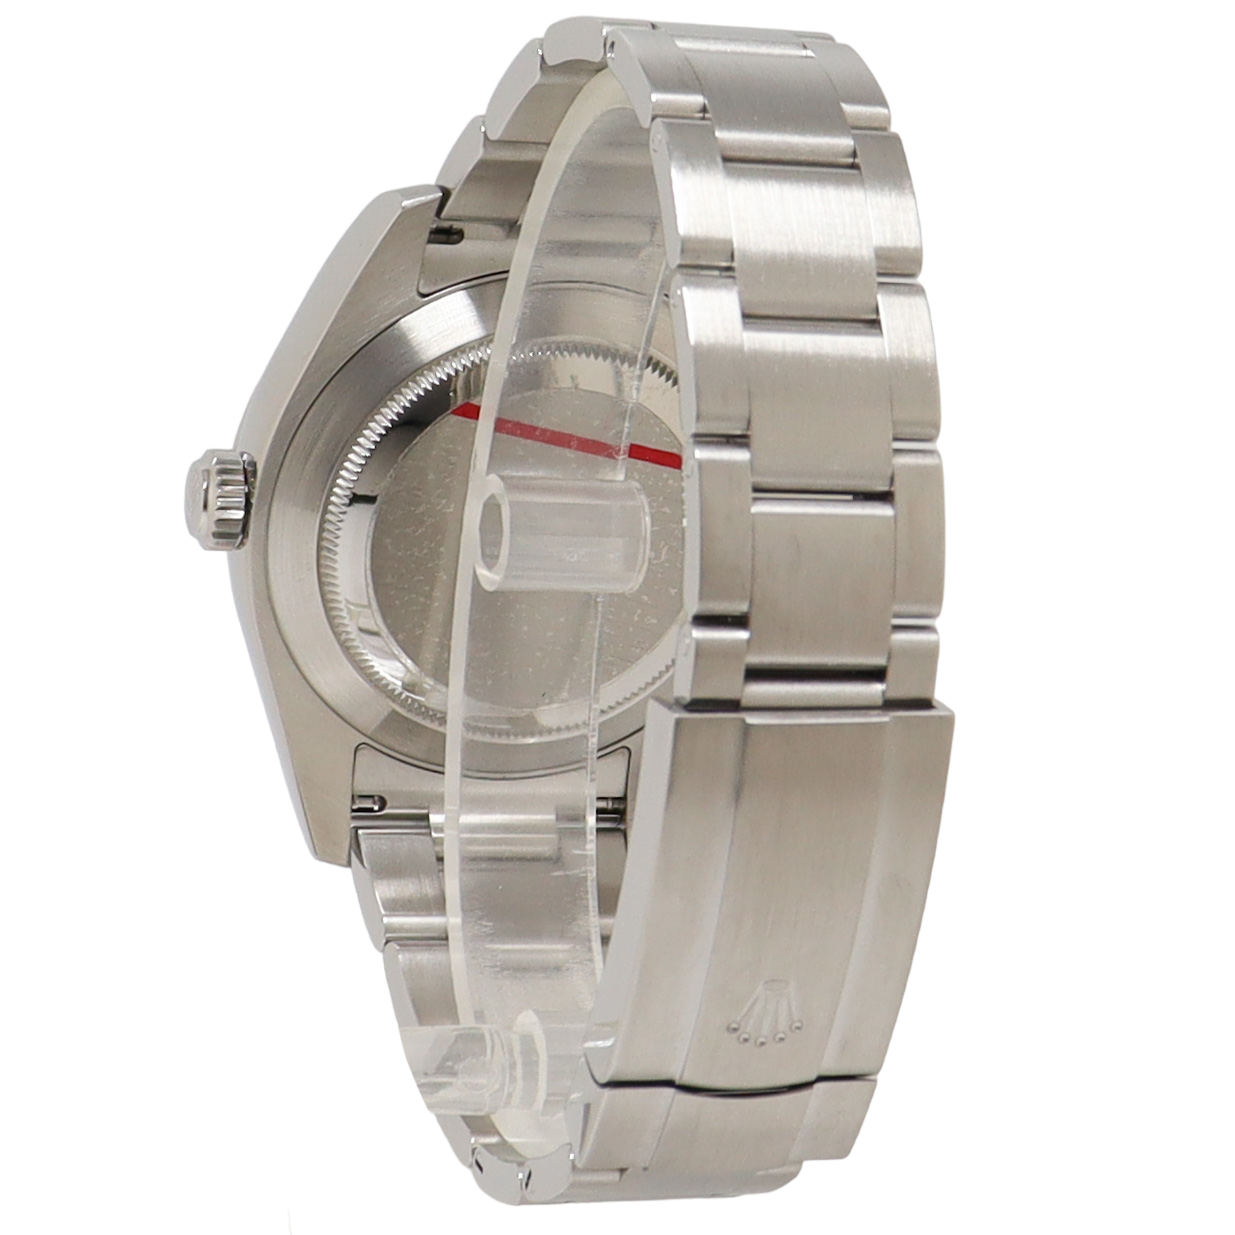 Rolex Air-King Stainless Steel 40mm Black Arabic Dial Watch Ref #116900 - Happy Jewelers Fine Jewelry Lifetime Warranty